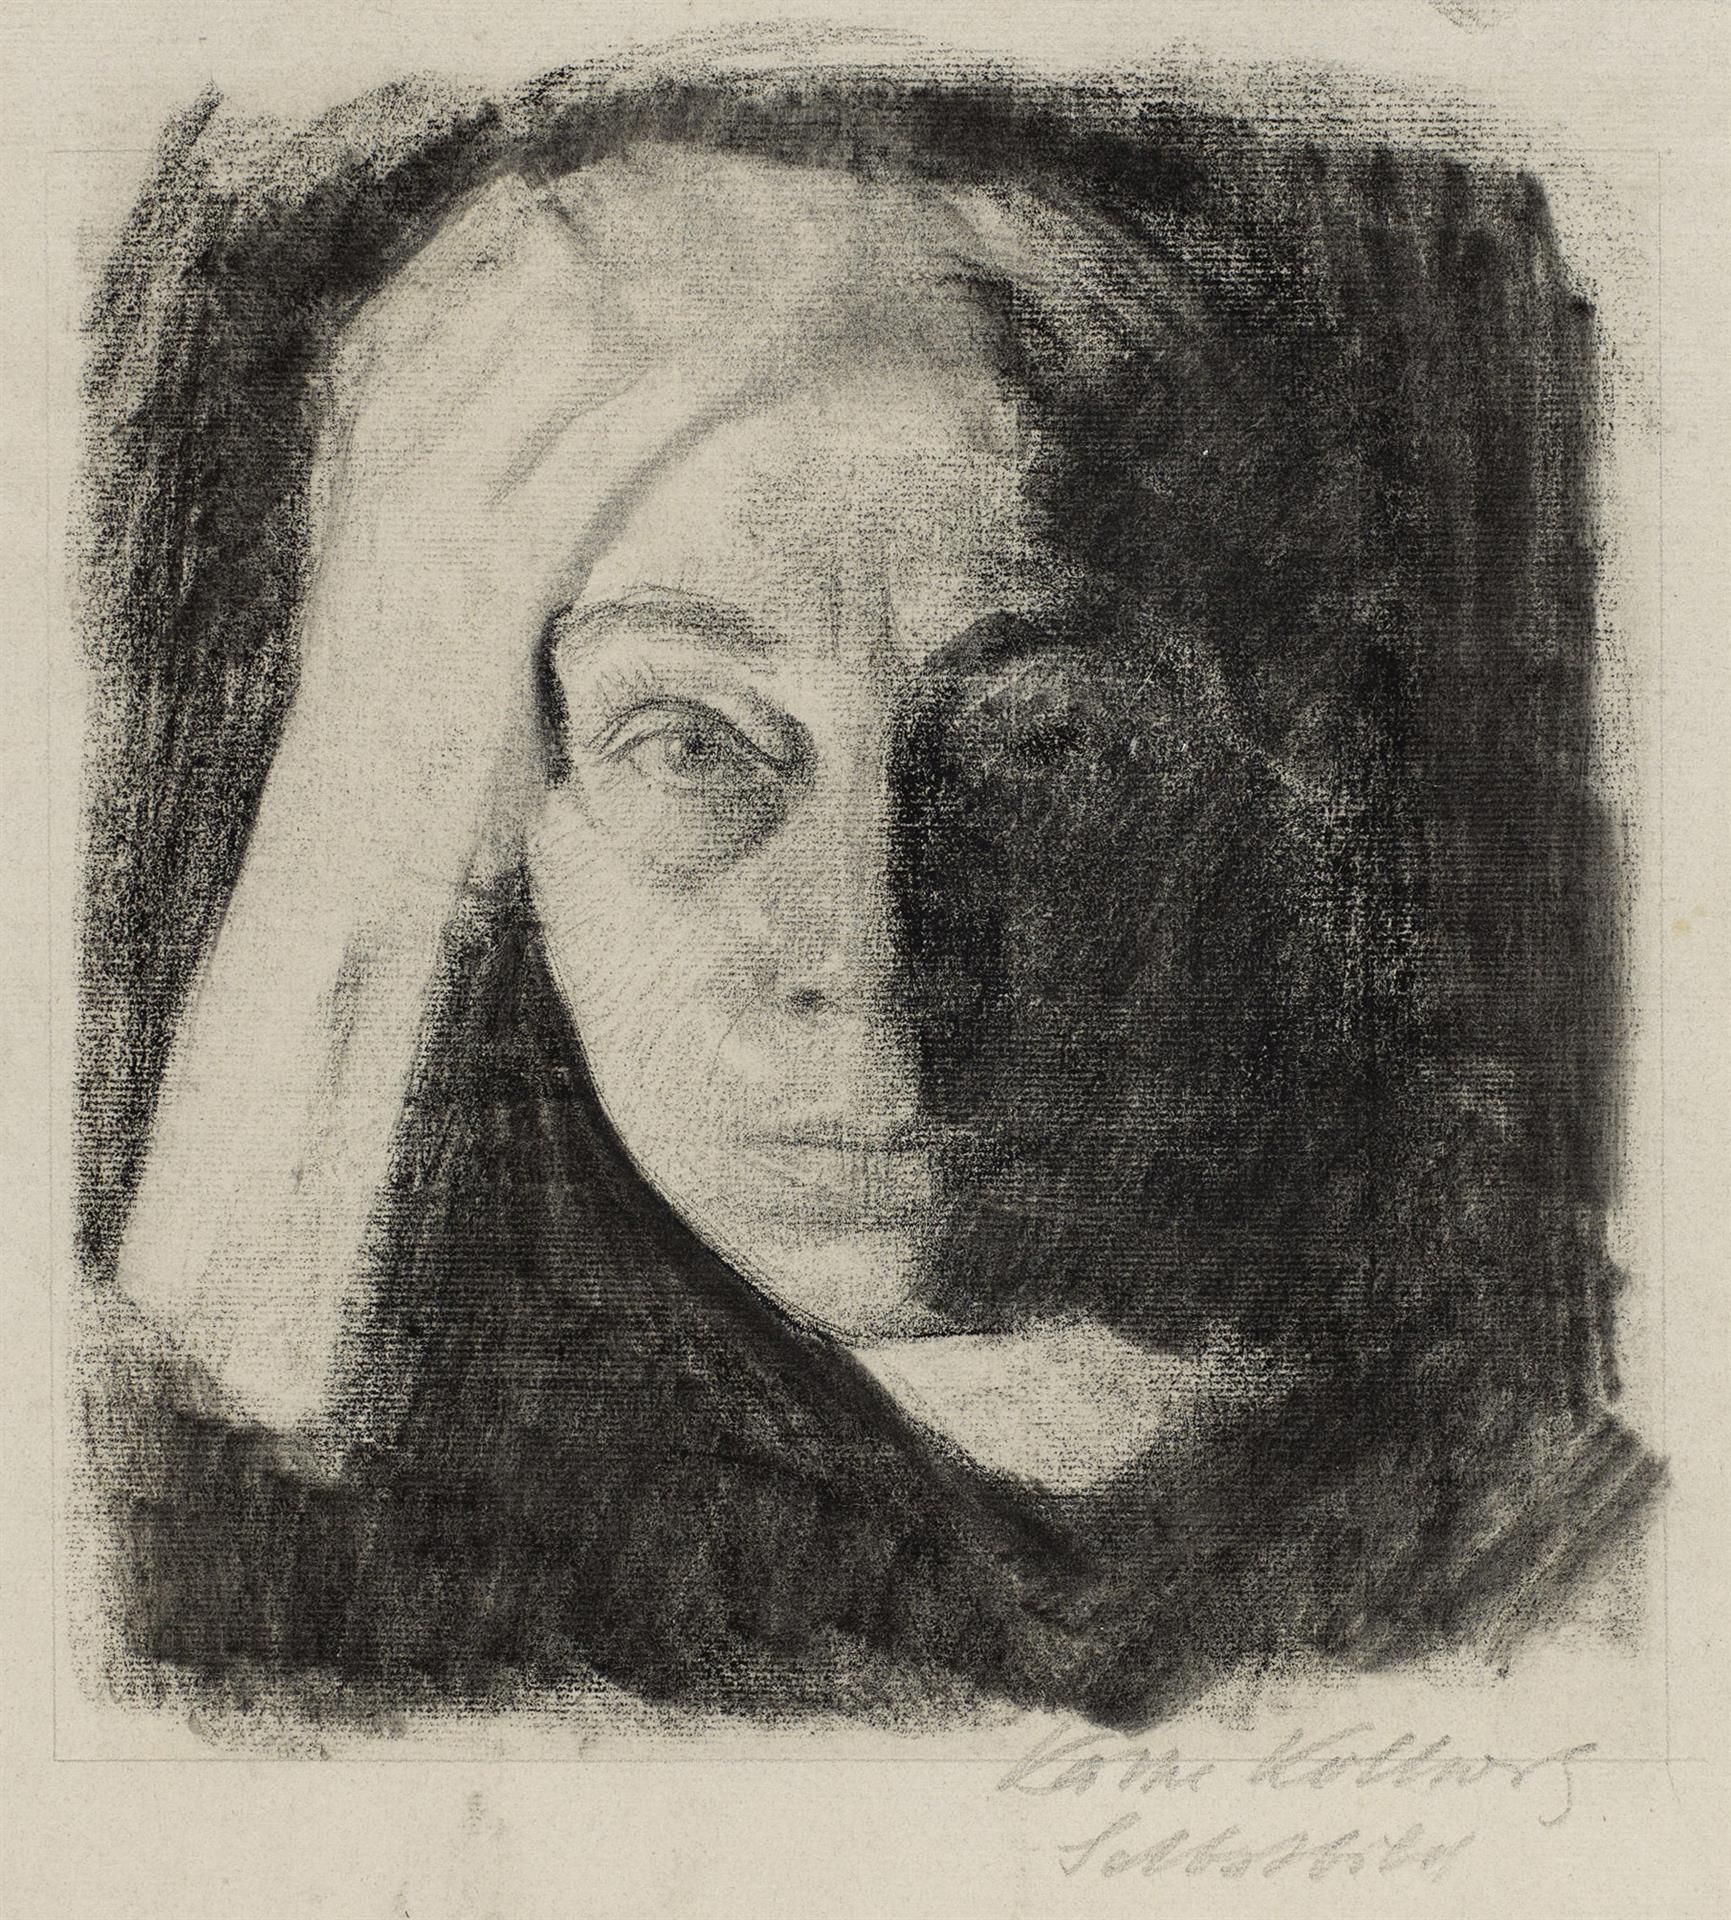 Käthe Kollwitz, Selbstbildnis en face, um 1910, Kohle auf graublauem Ingres-Papier, NT 688